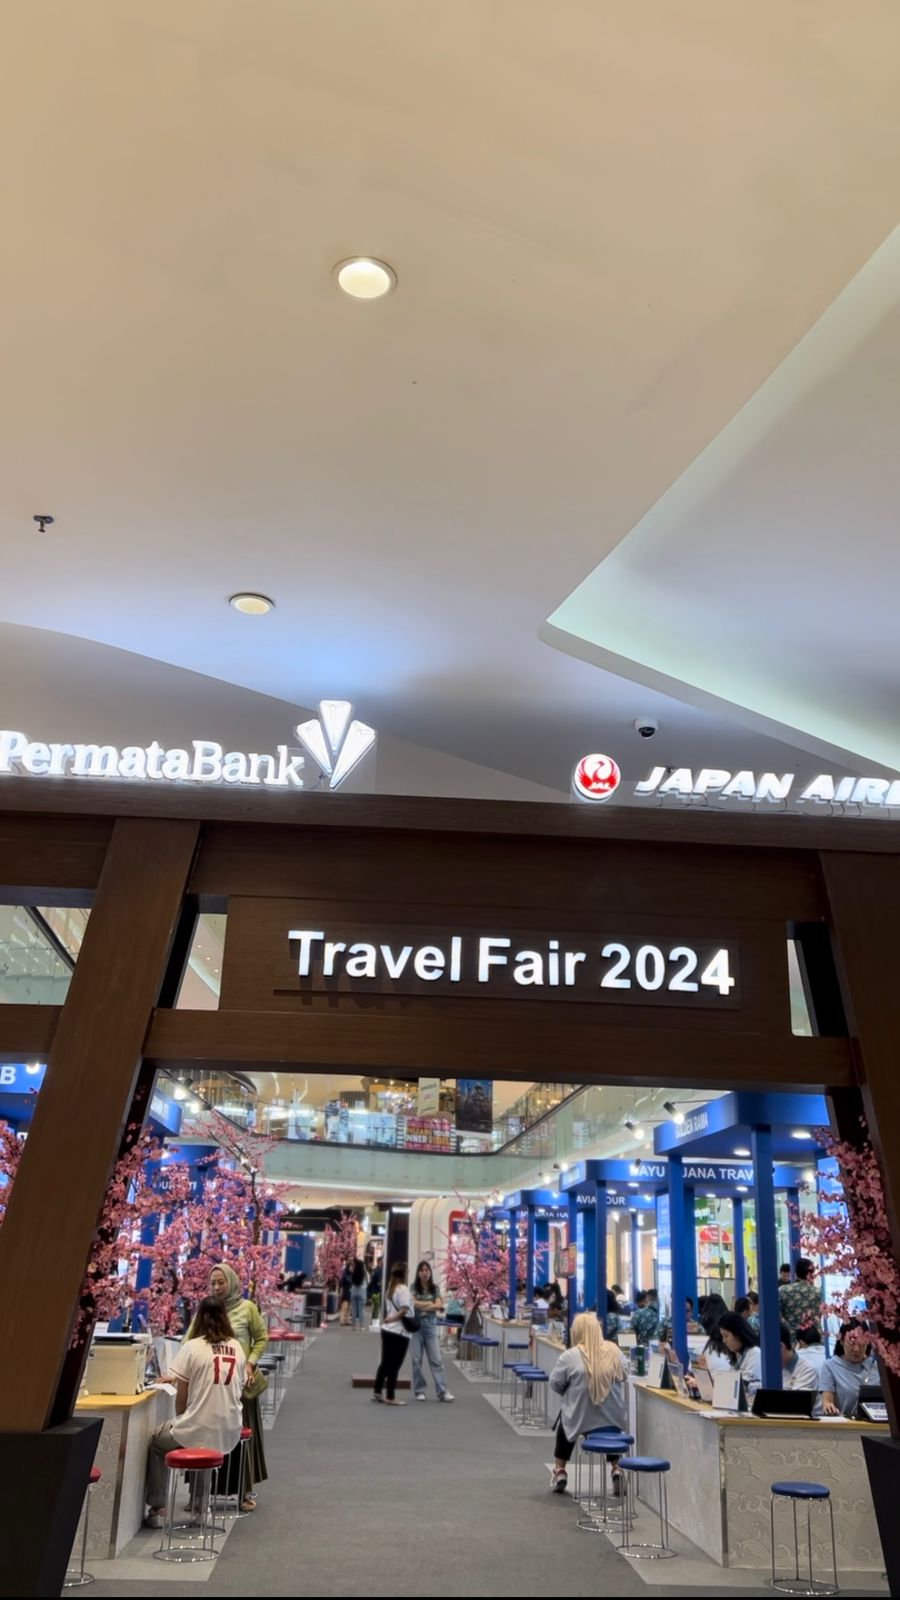 Japan Airlines x Permata Bank Travel Fair 2024